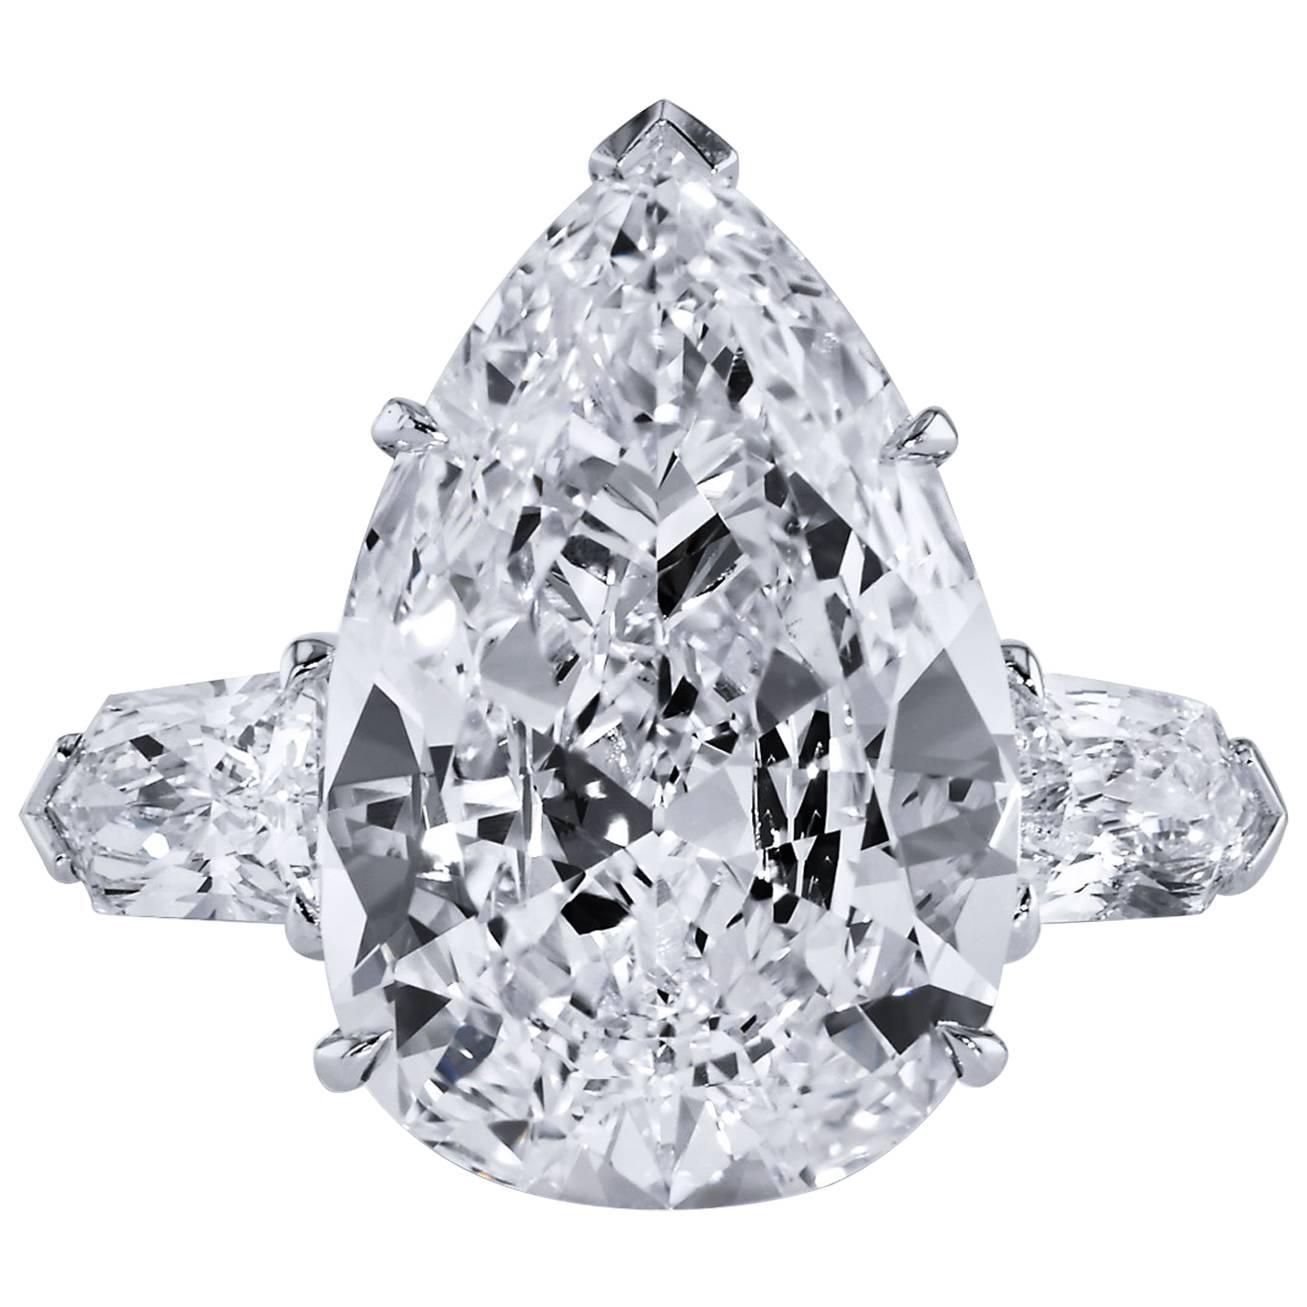 7.01 Carat Pear Cut Diamond Engagement Ring